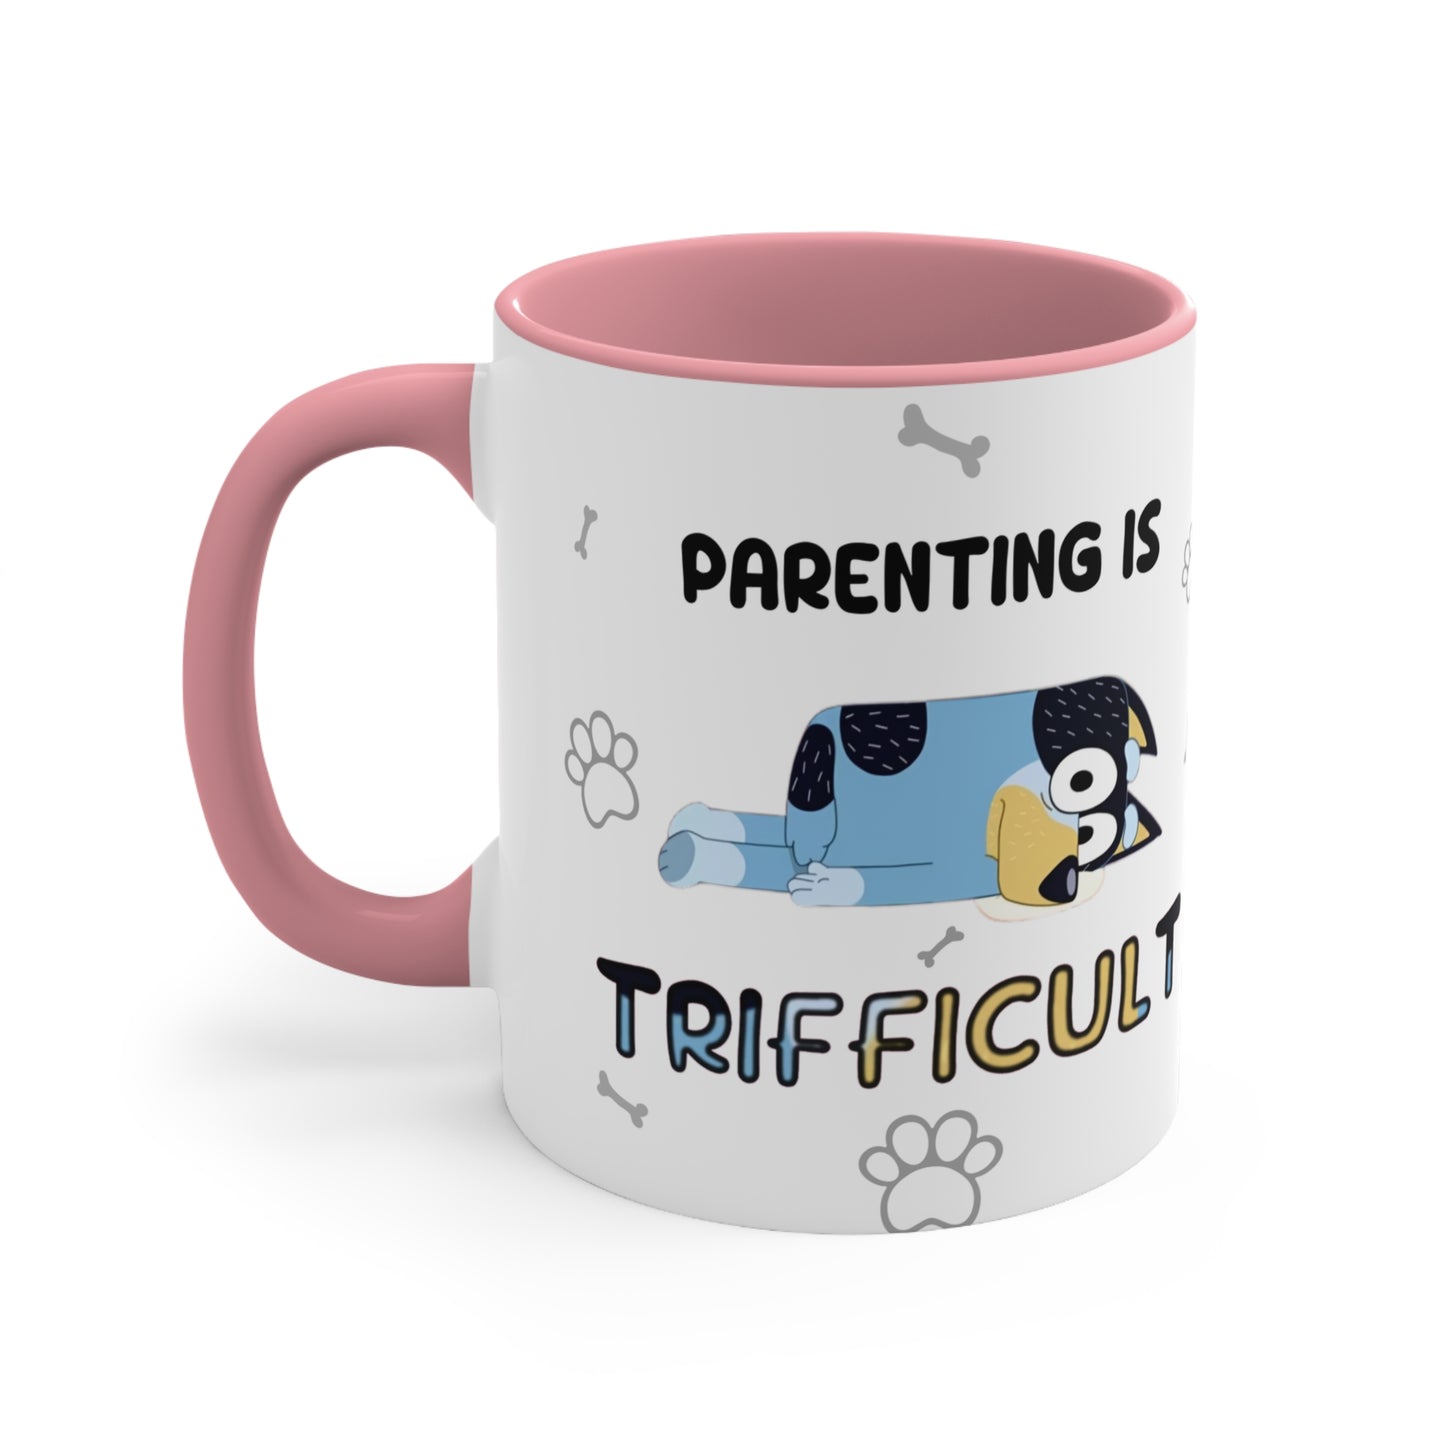 Parenting is Trifficult - Bandit Heeler Mug